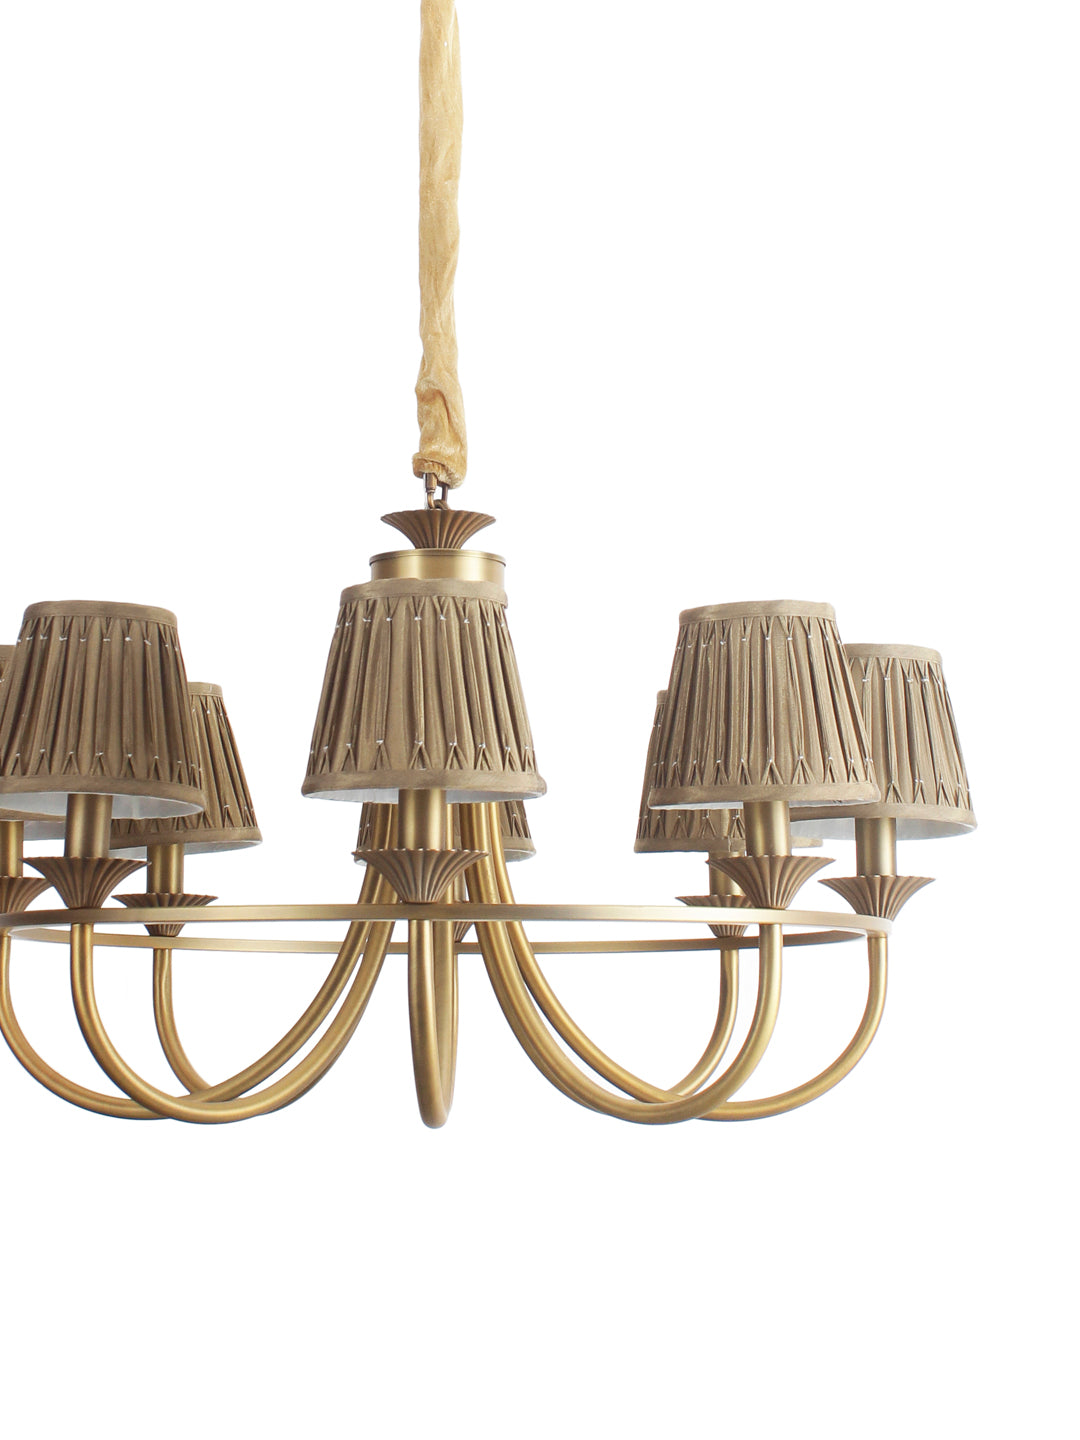 Rubel 8-Lamp Traditional Chandelier | Buy Luxury Chandeliers Online ...